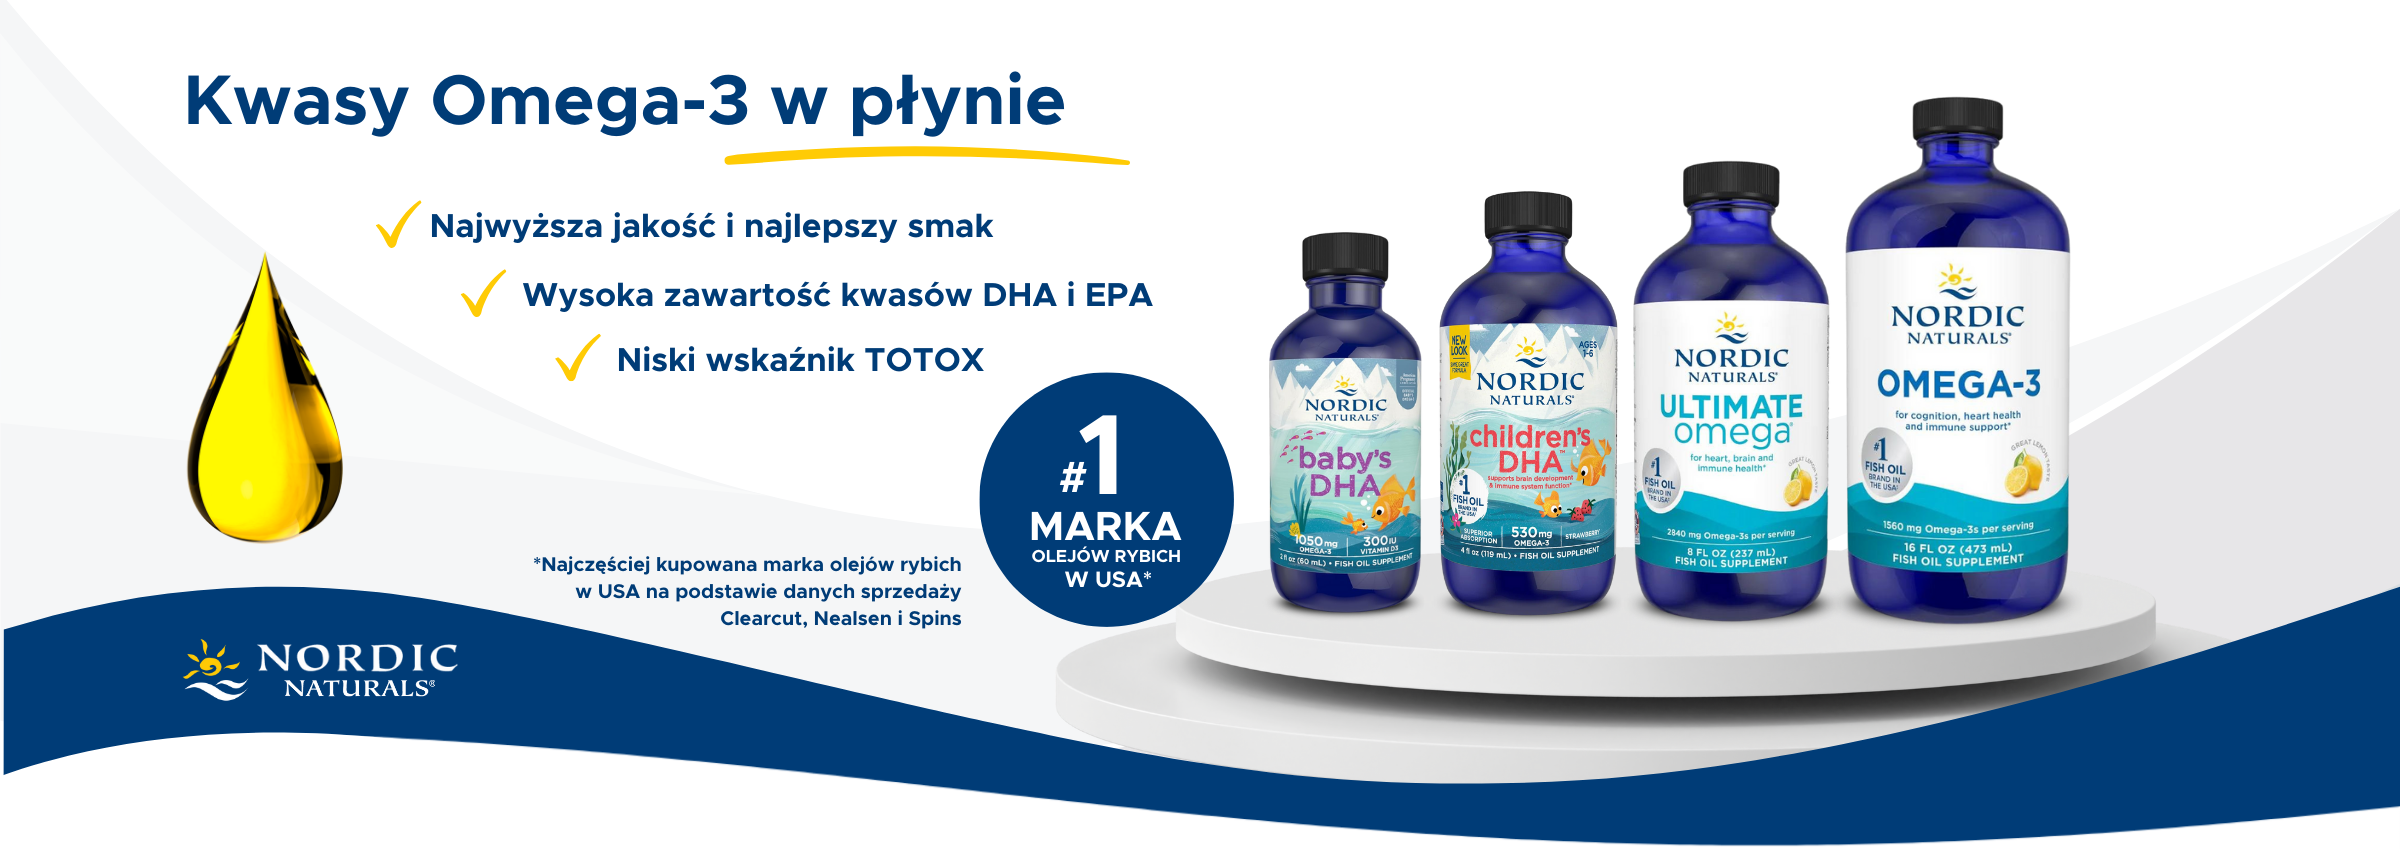 Nordic Naturals Kwasy omega-3 w płynie